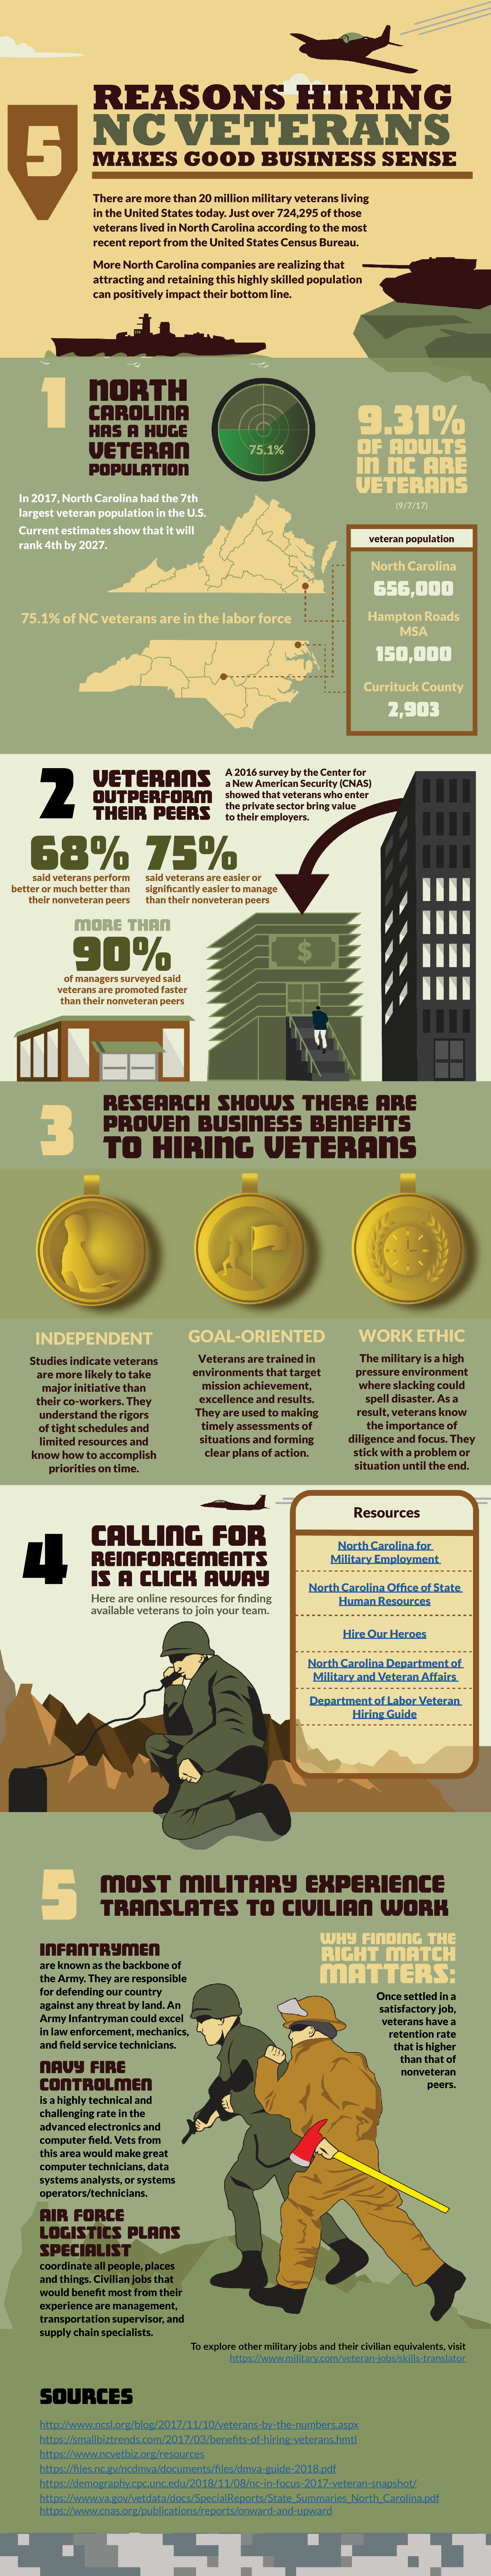 5 Reason Hiring NC Veterans Makes Good Business Sense - INFOGRAPHIC